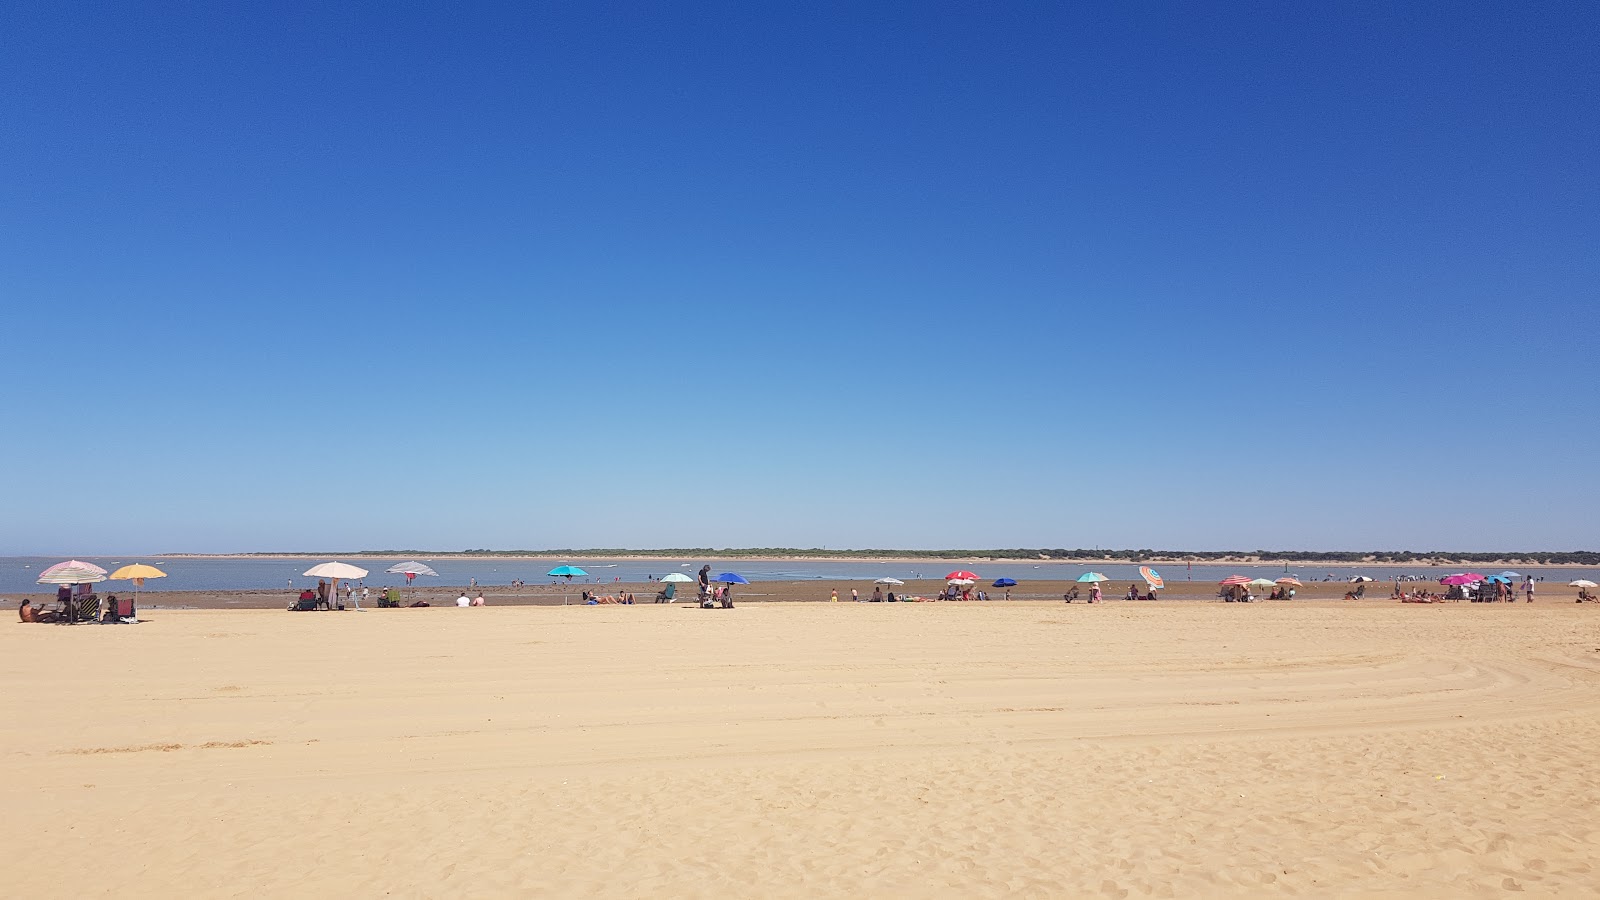 Foto von Playa de las Piletas mit langer gerader strand